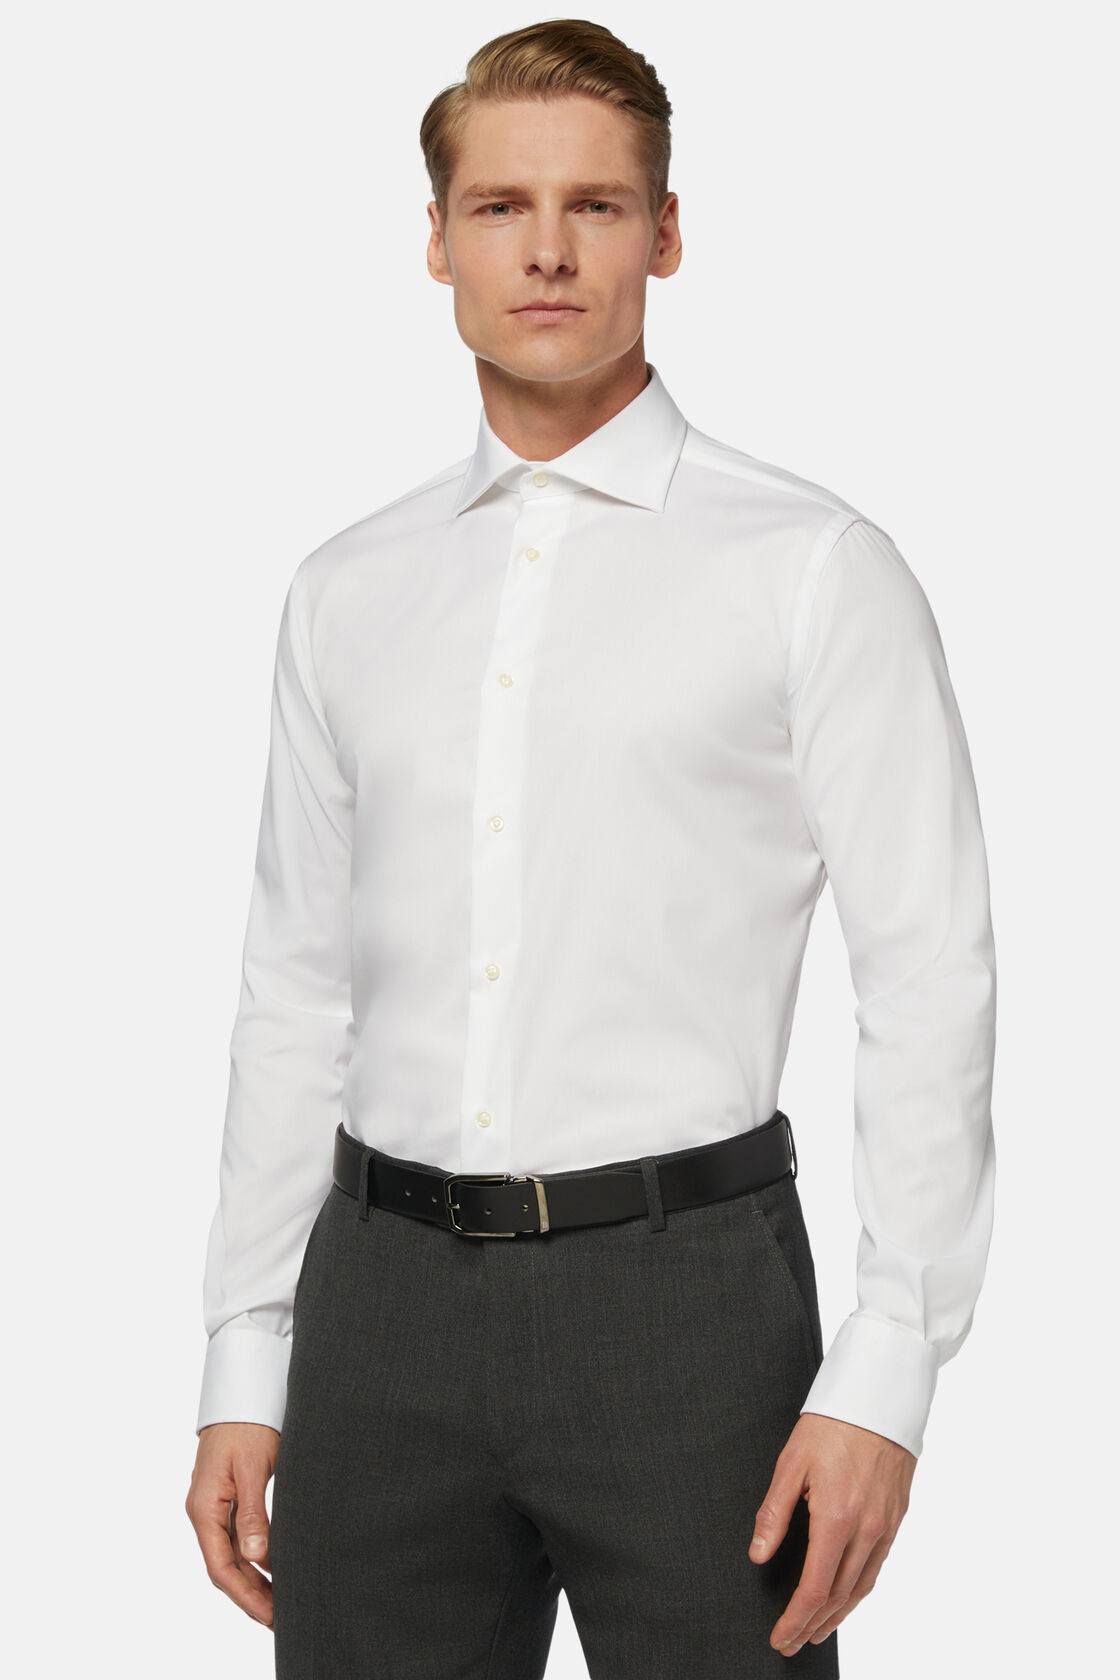 Stretch P.Point Windsor Collar White Shirt Reg Fit Long, White, hi-res